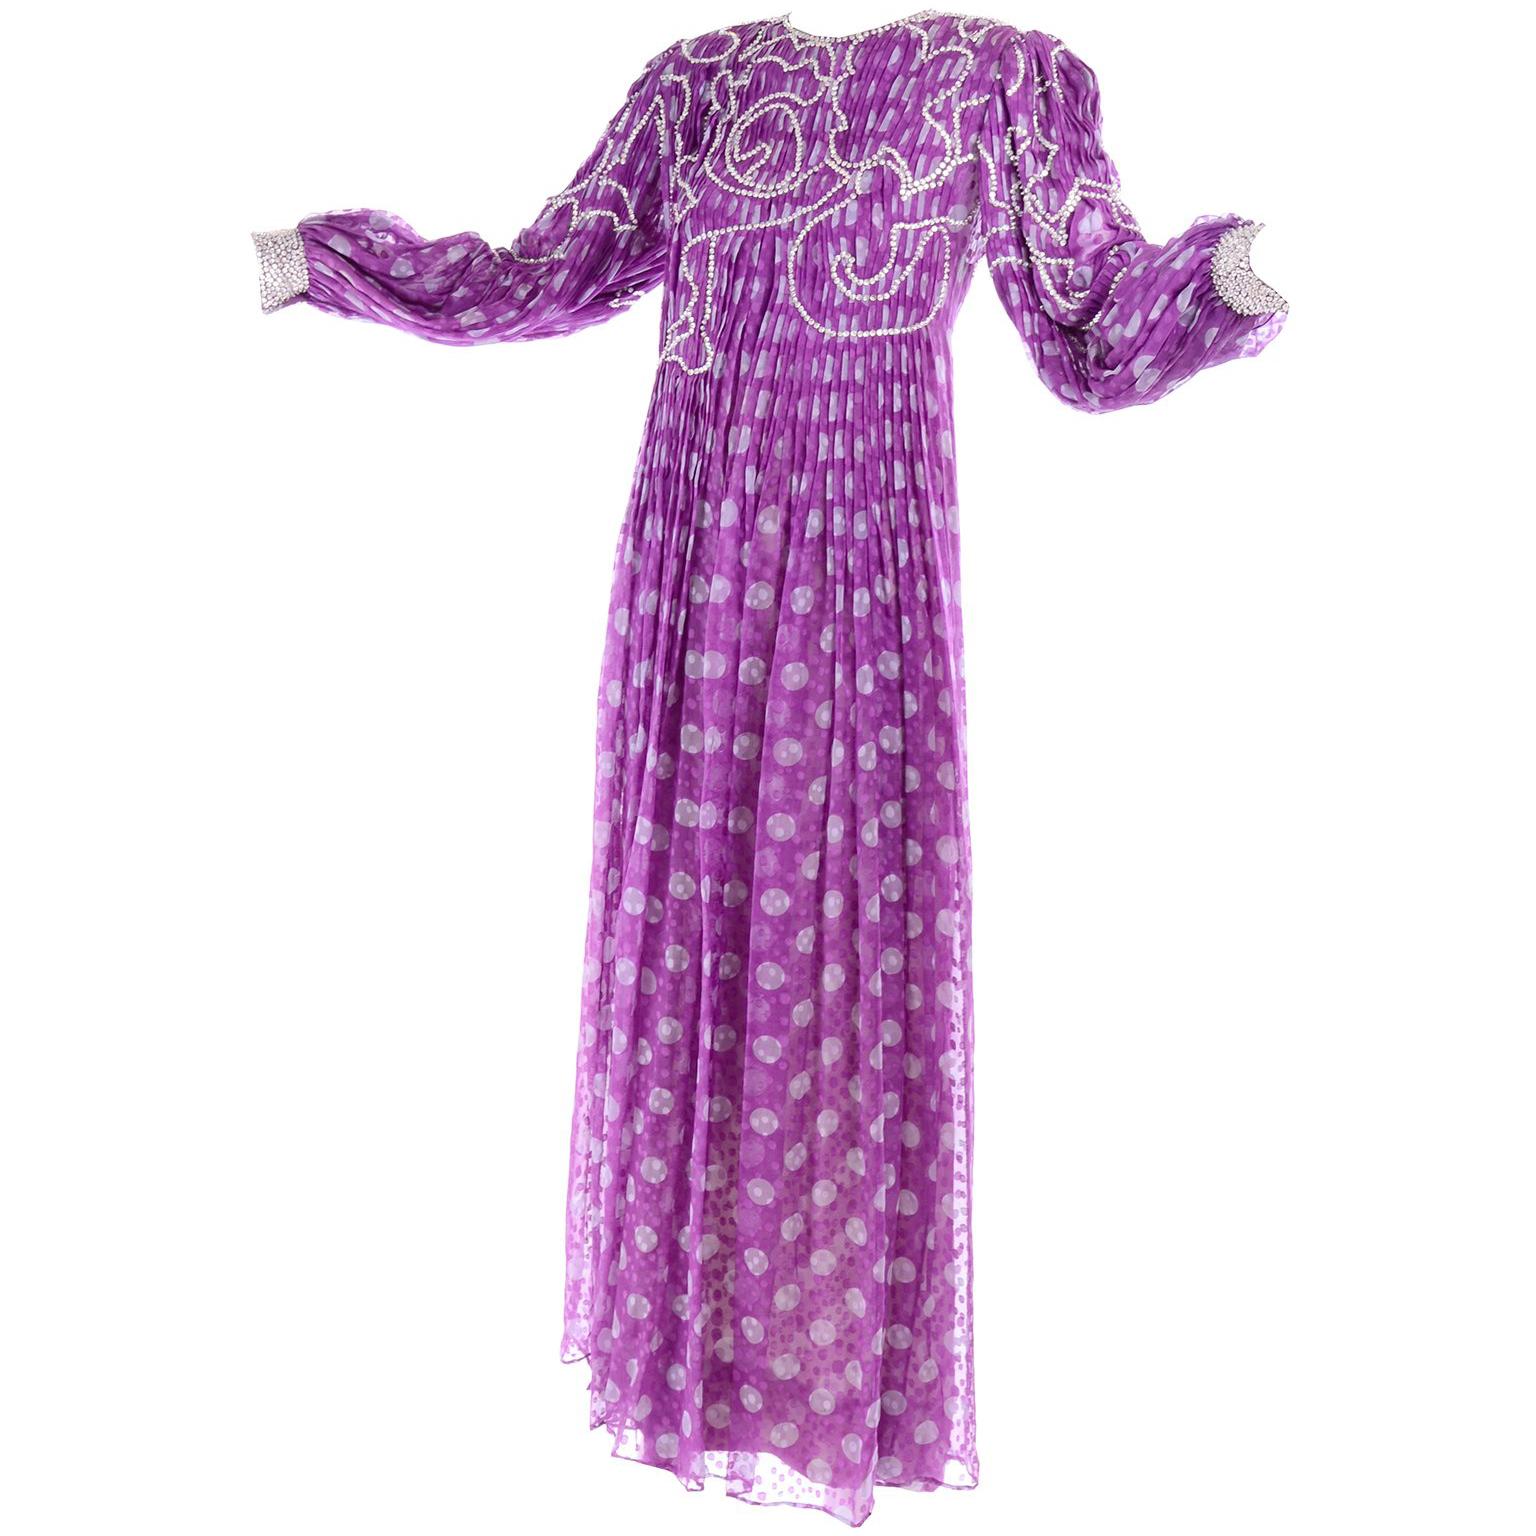 James Galanos Silk Chiffon Purple Polka Dot Vintage Dress w Silver Sequins